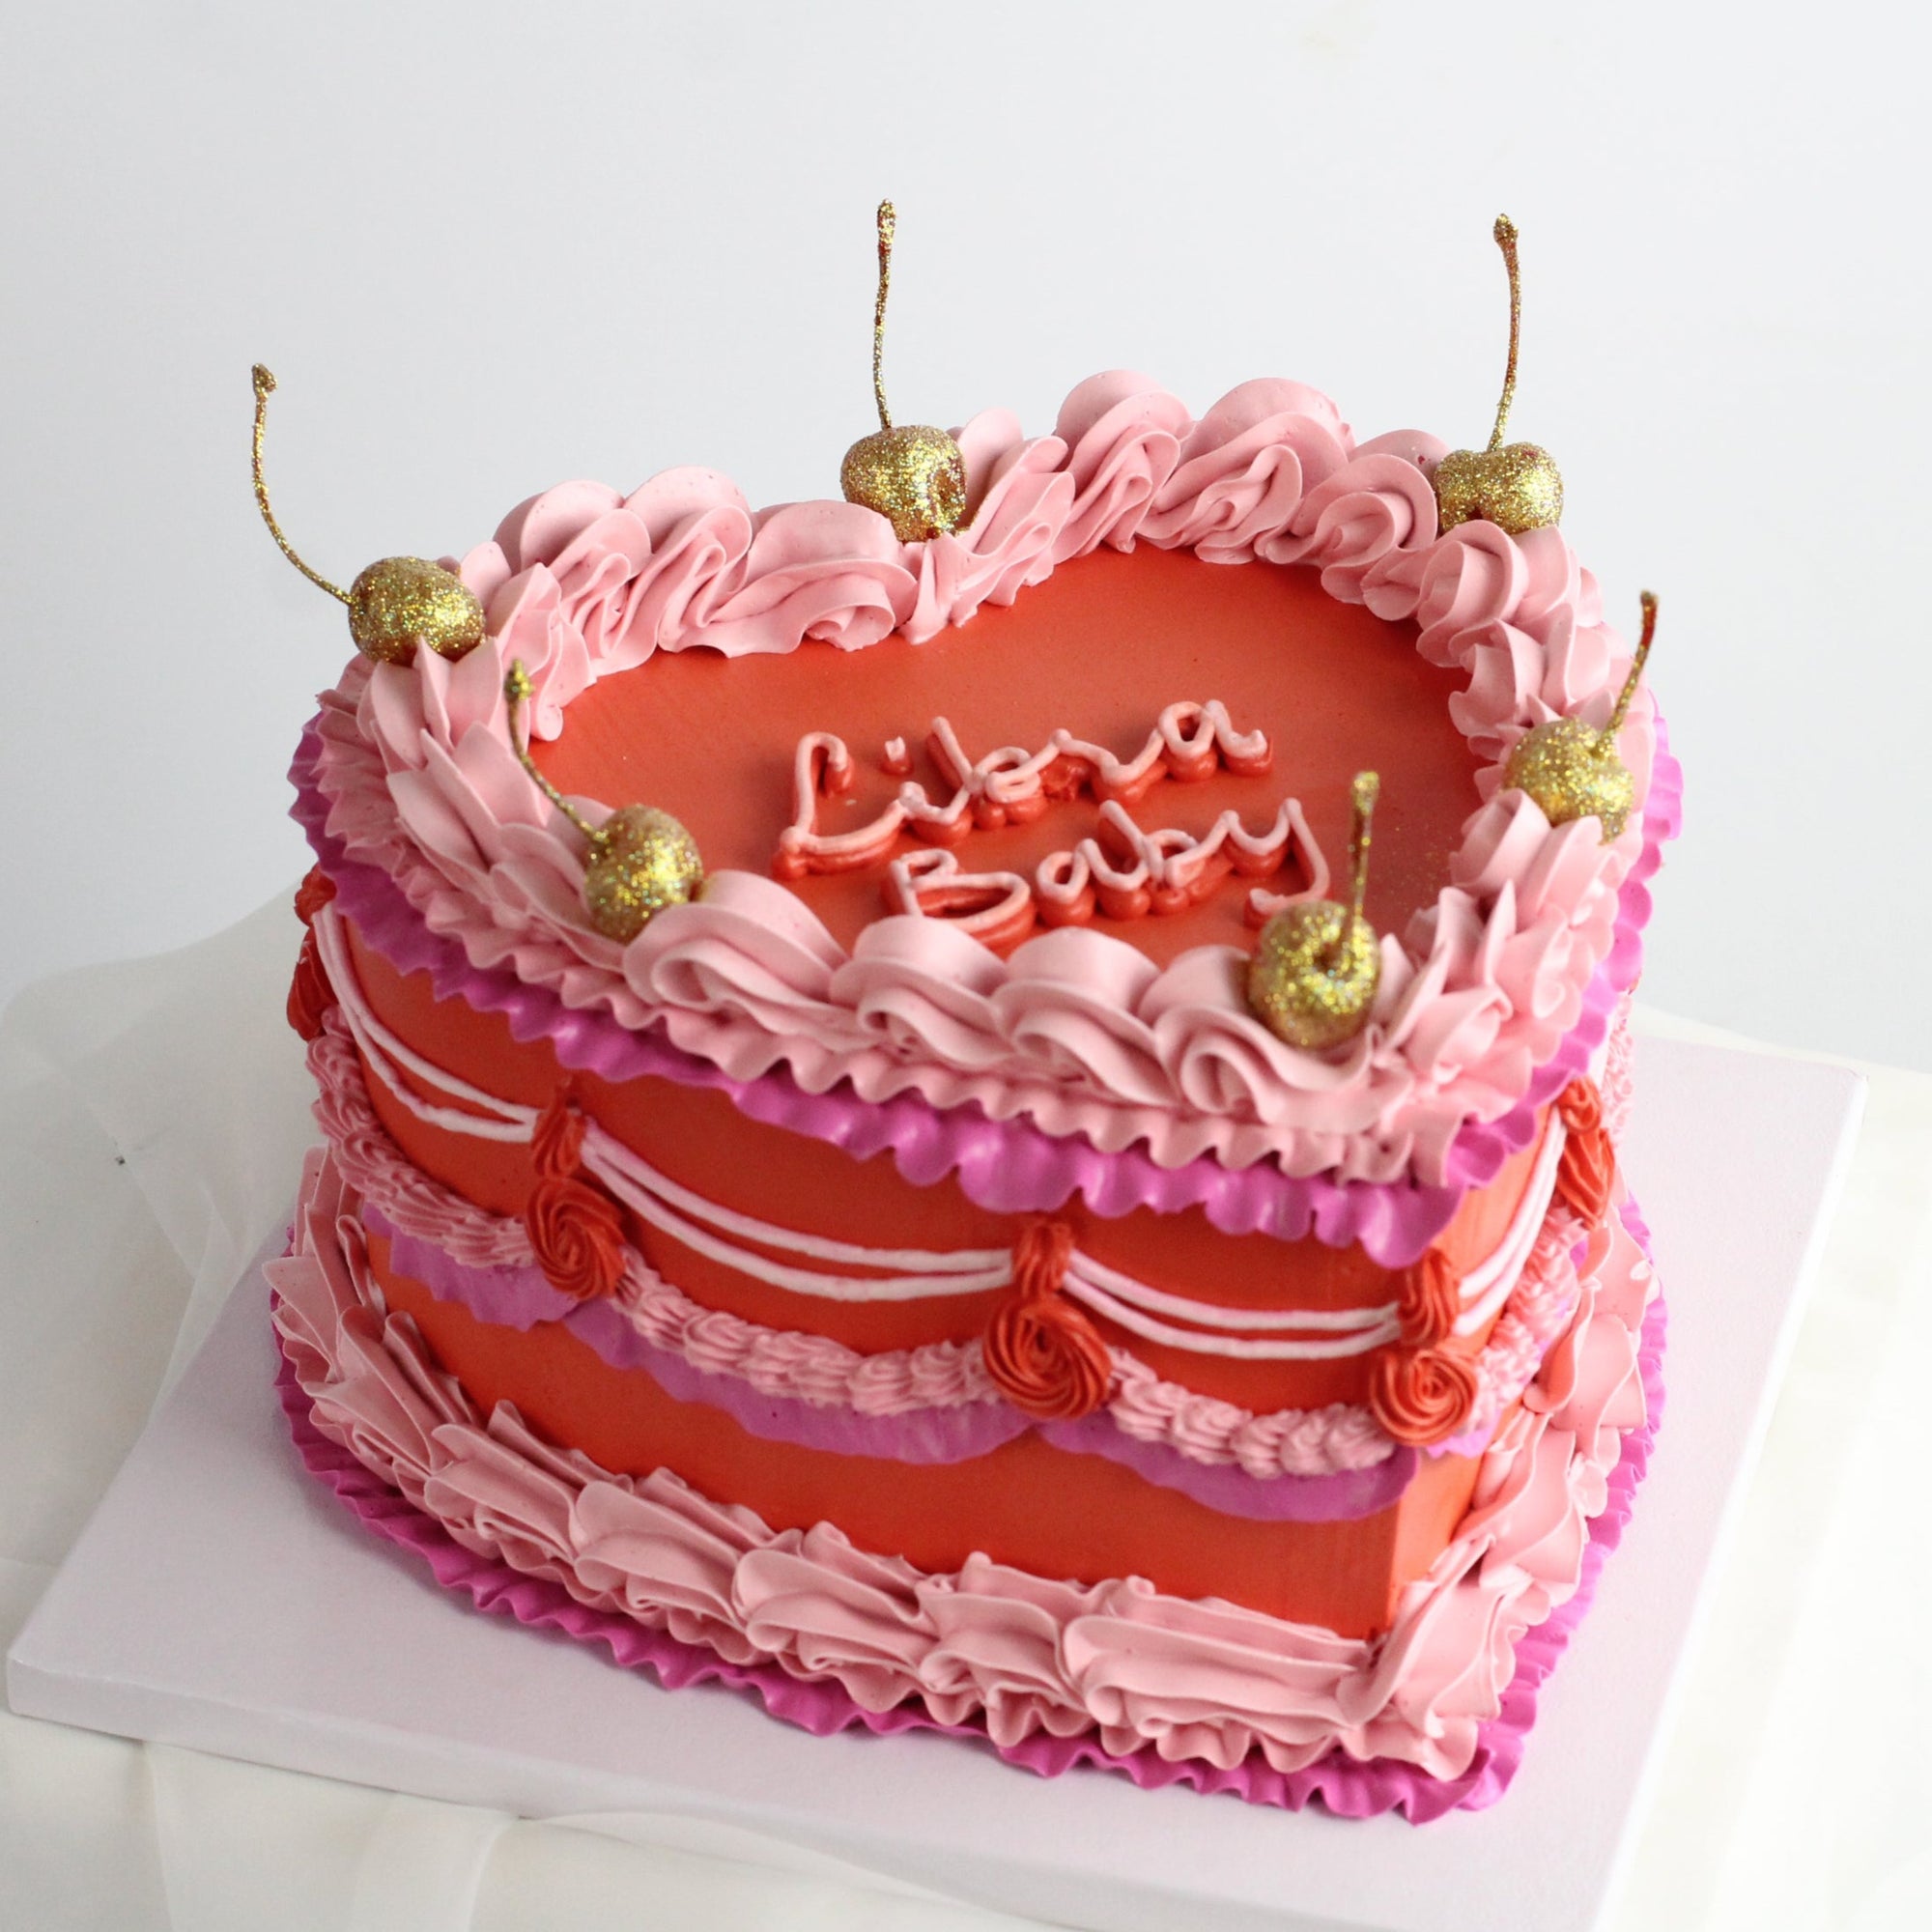 Anniversary Heart Shape Cake - Online Cake Order in Lahore